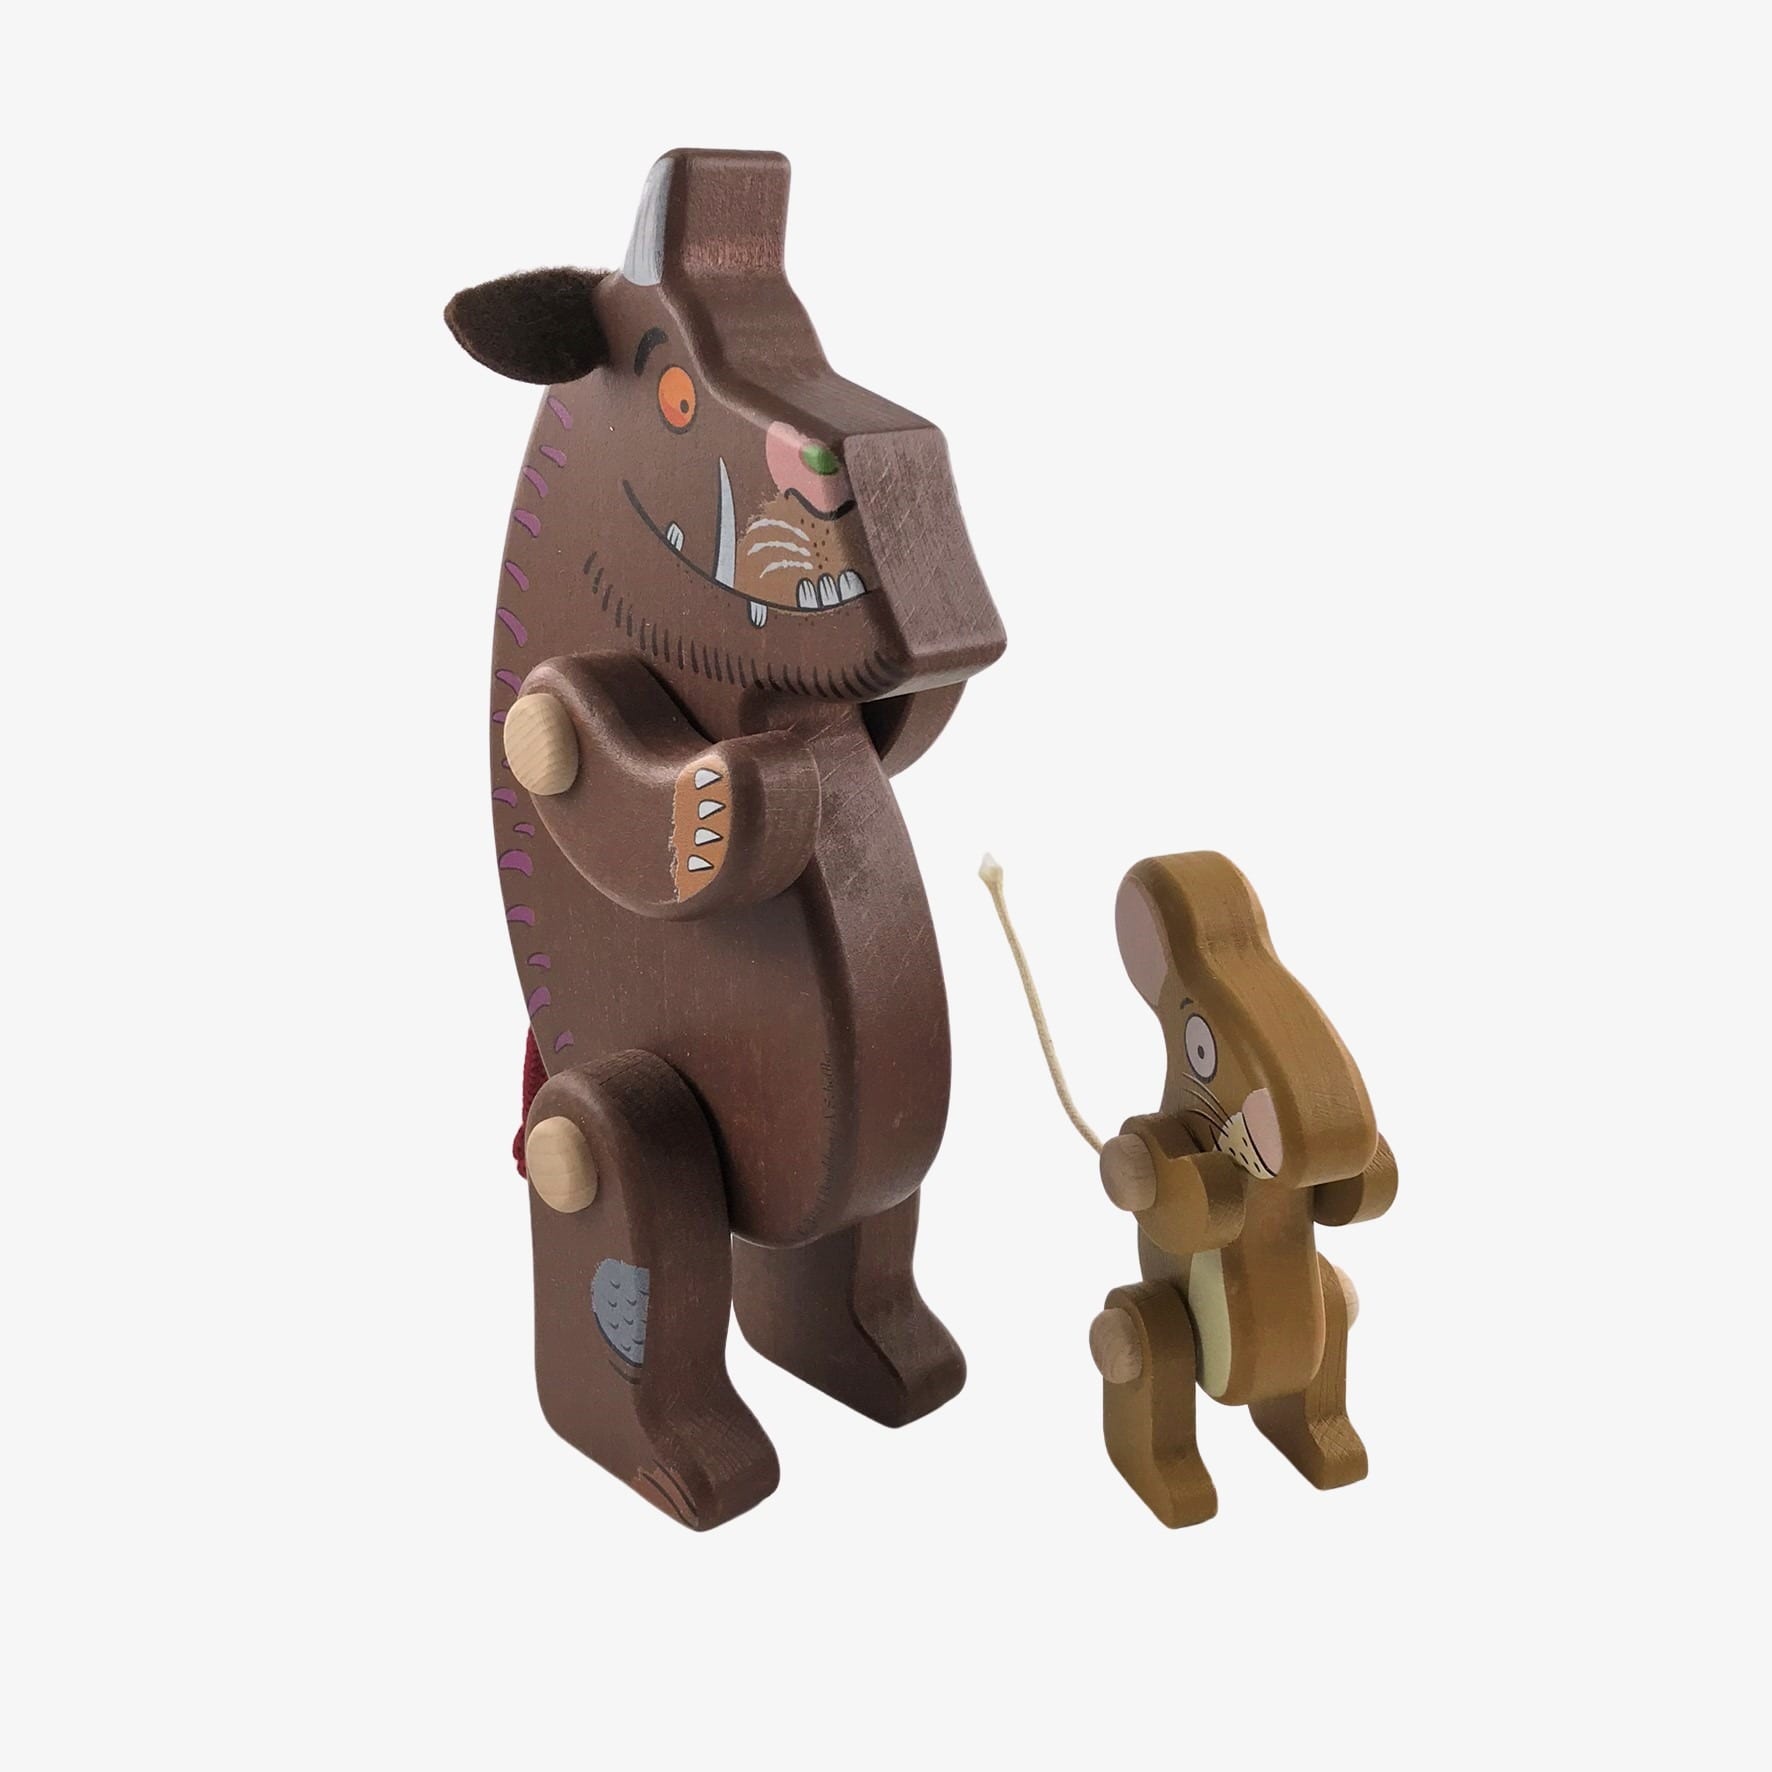 gruffalo toy figures